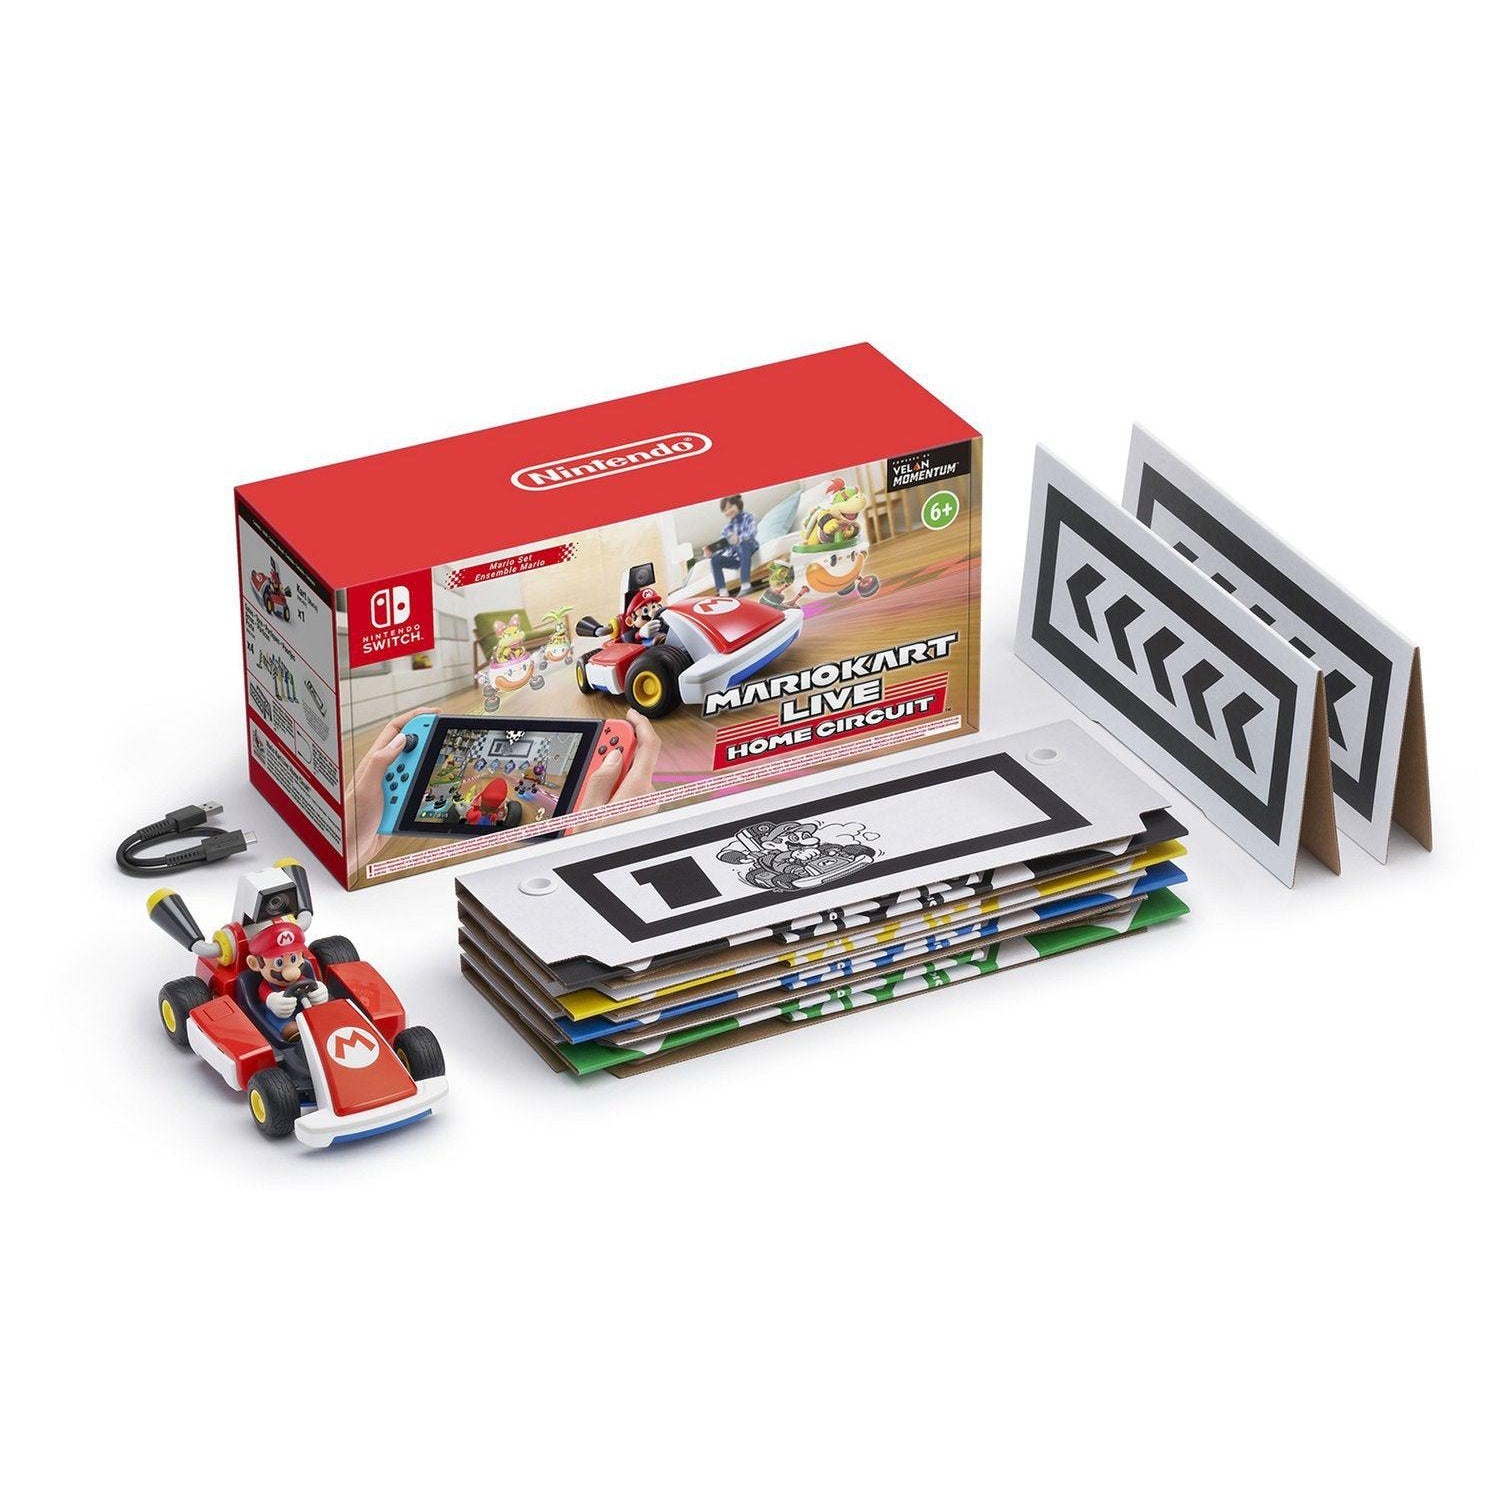 Mario Kart Live Home Circuit Nintendo Switch Game - Refurbished Pristine